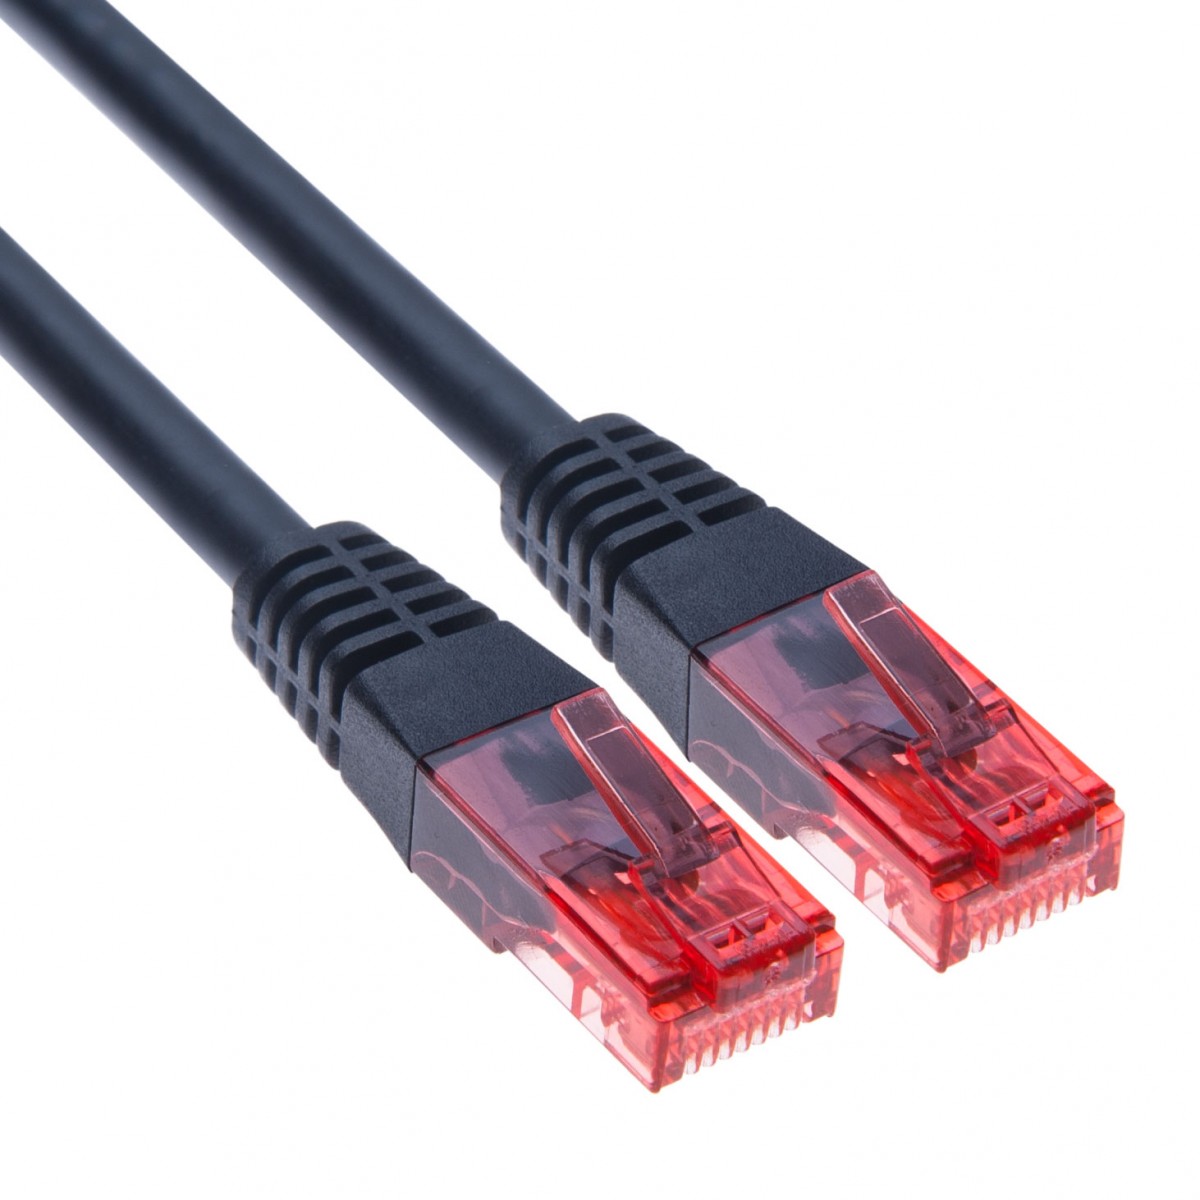 Cable 2m Cat 6 Gigabit LAN Network Cable RJ45 Patch Cord 10